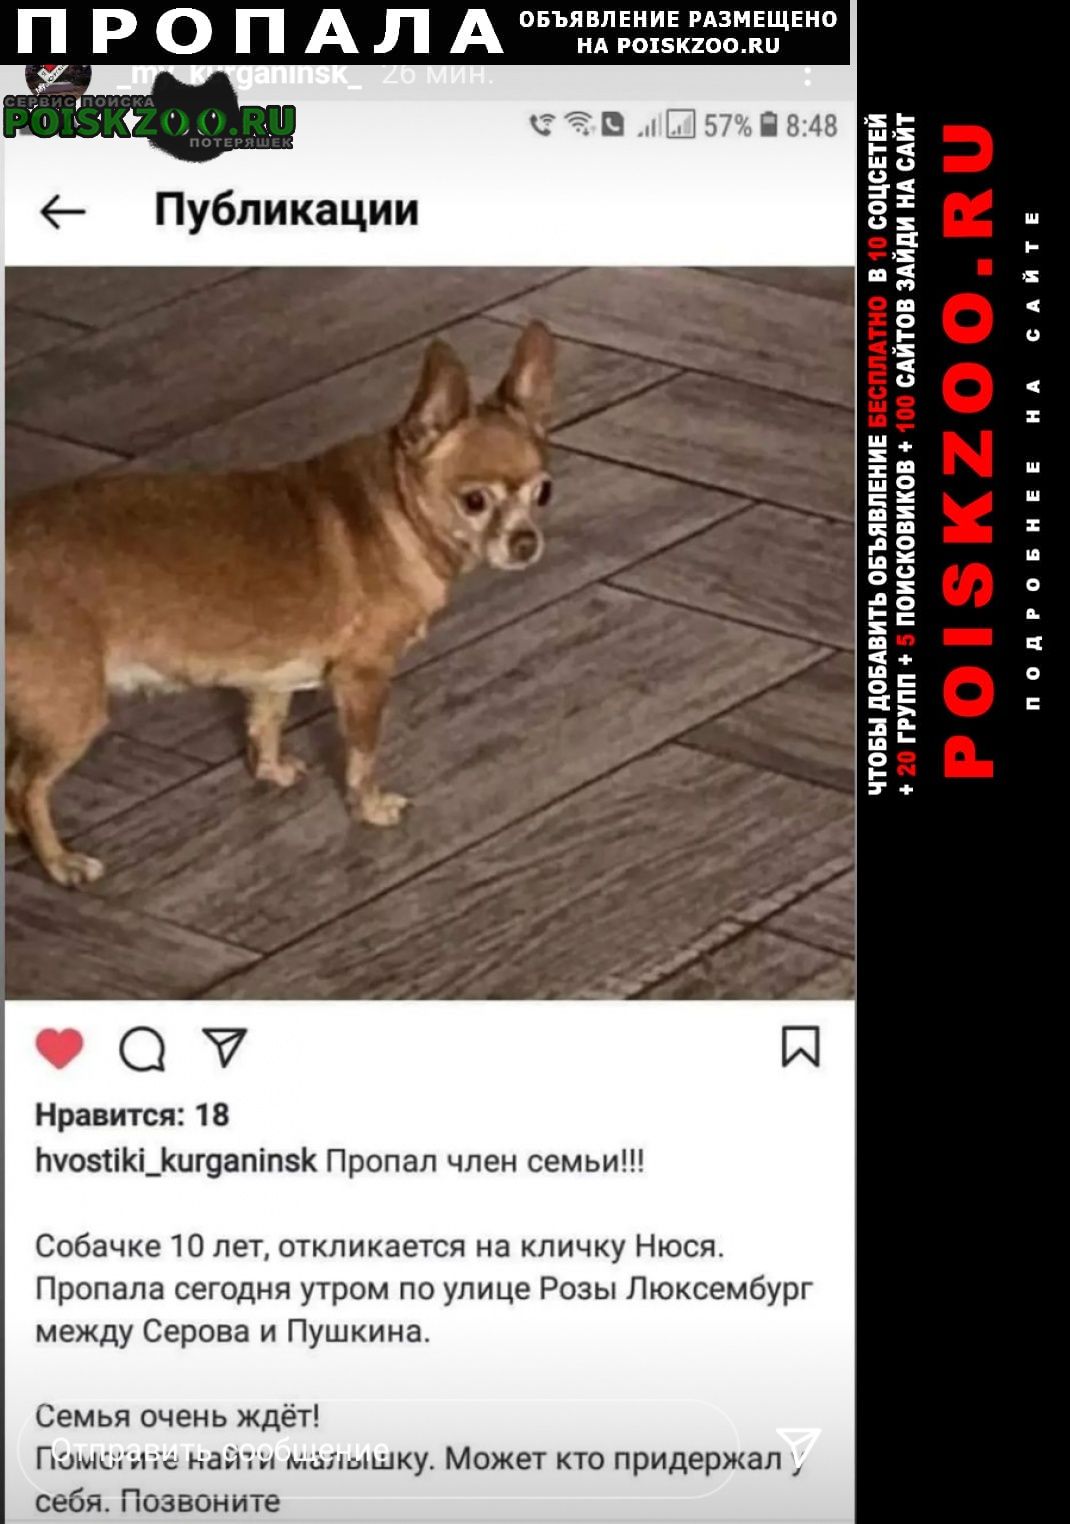 Пропала собака, член семьи Курганинск